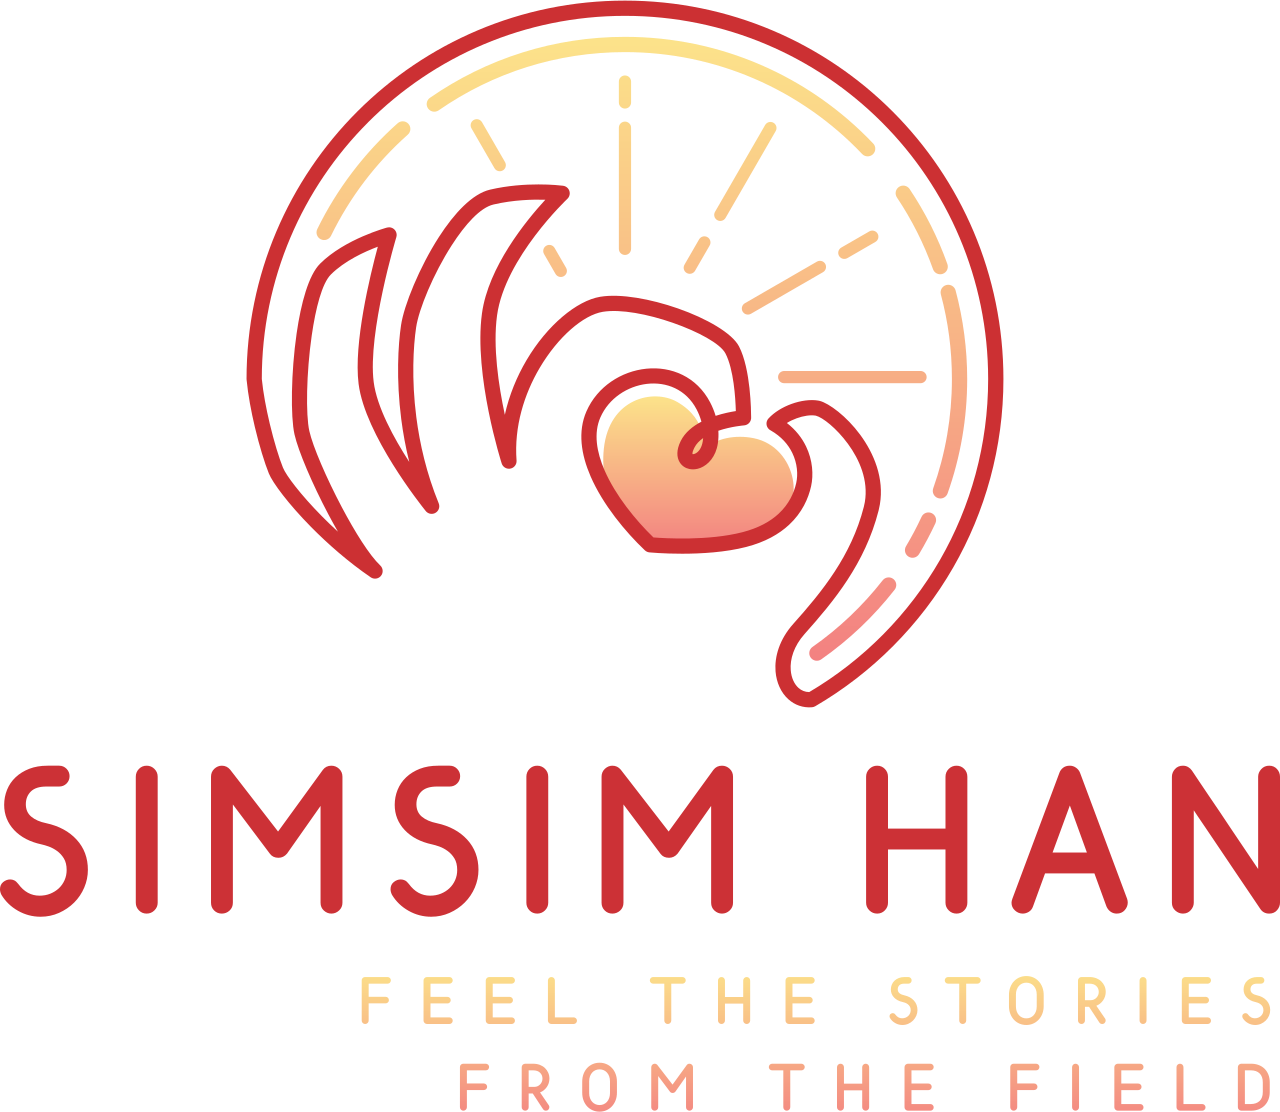 Simsim Han's web page